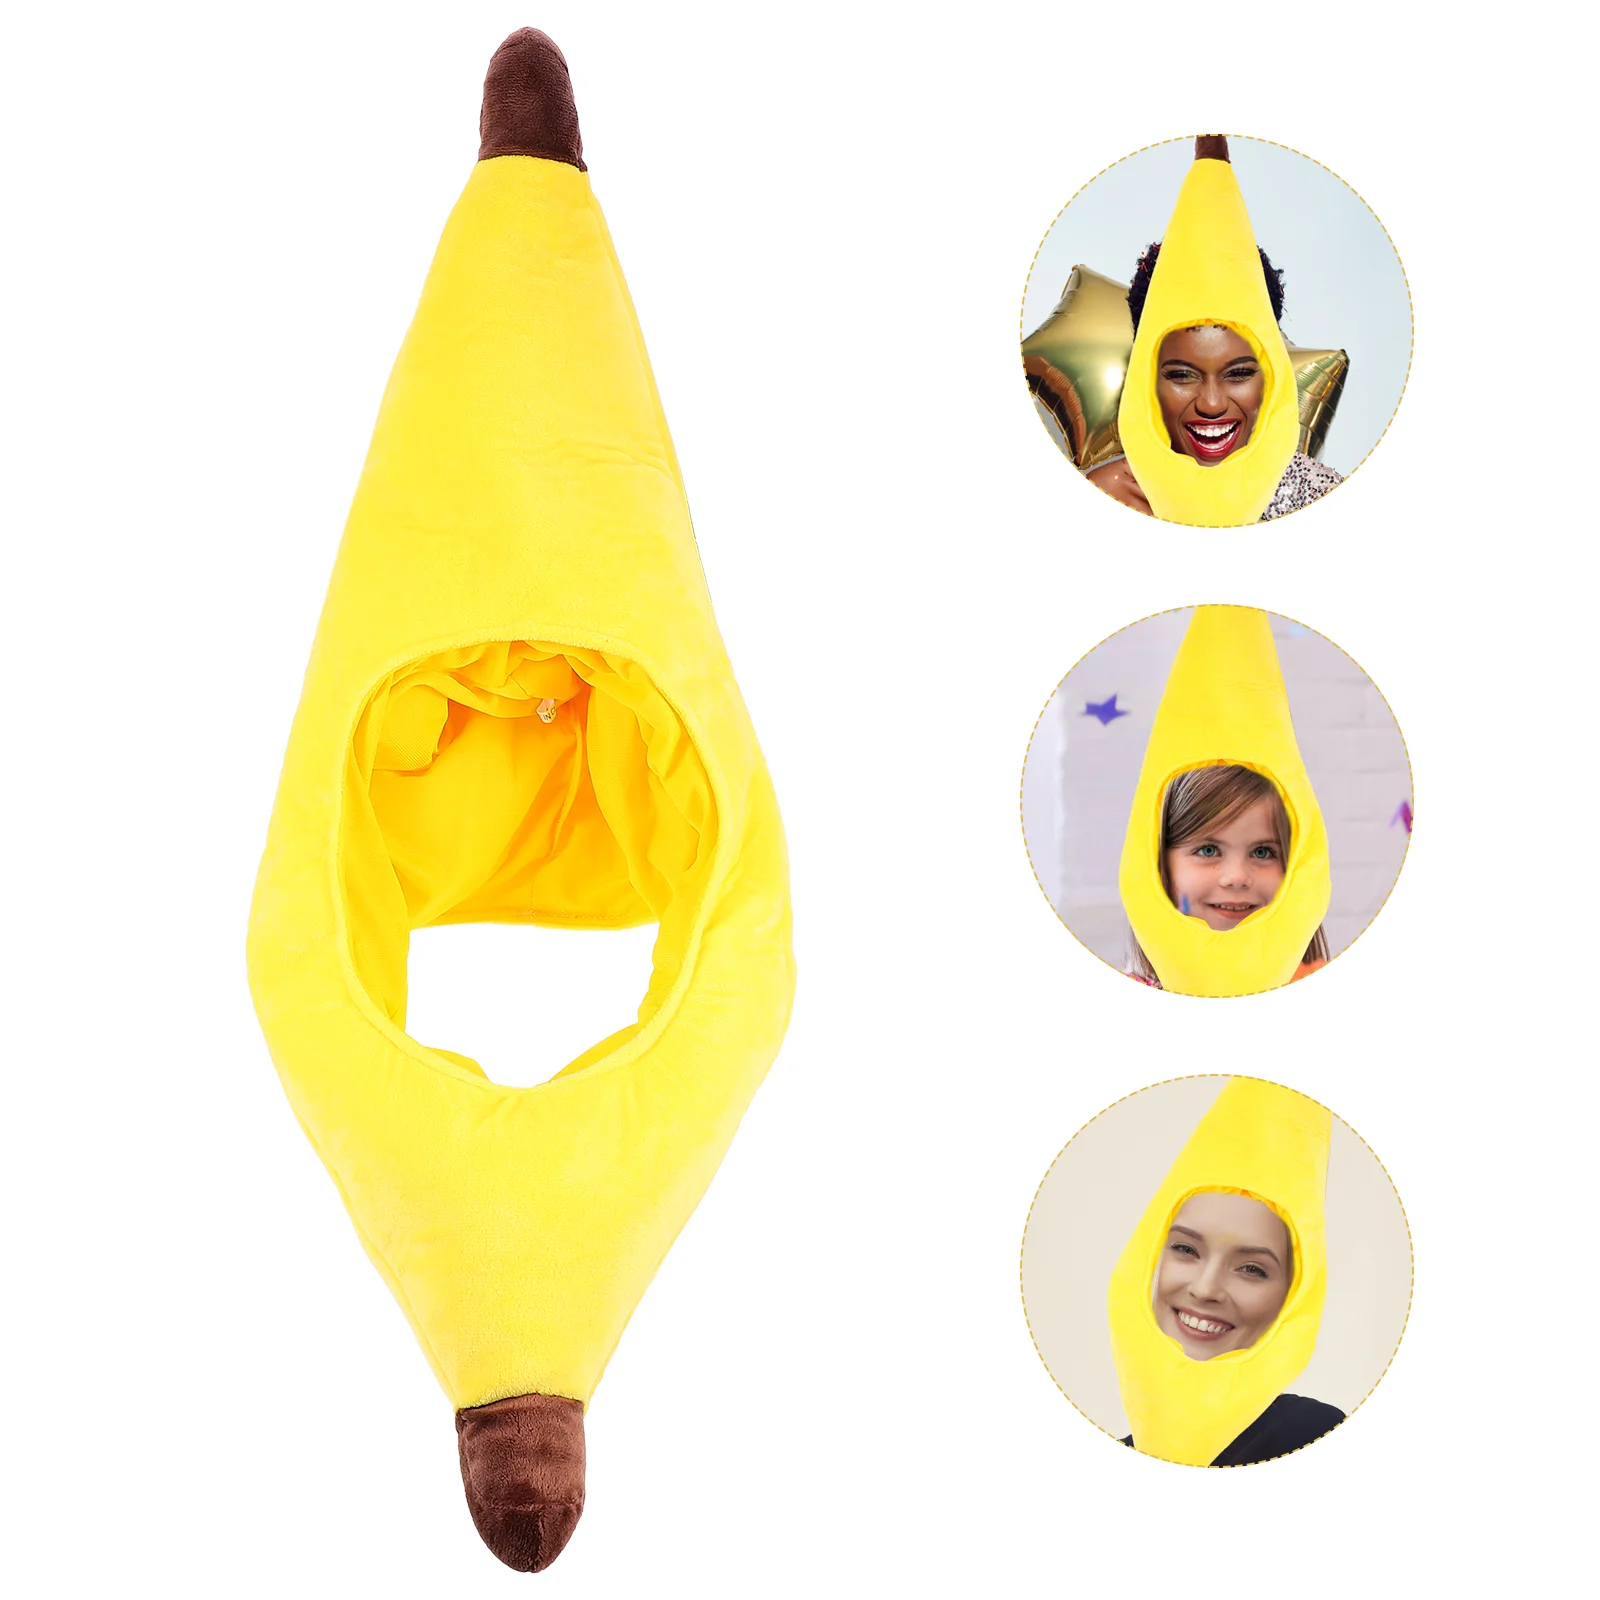 

Banana Headgear Funny Party Hat Headdress Novelty Role Play Outfits Halloween Gifts Shape Decorative